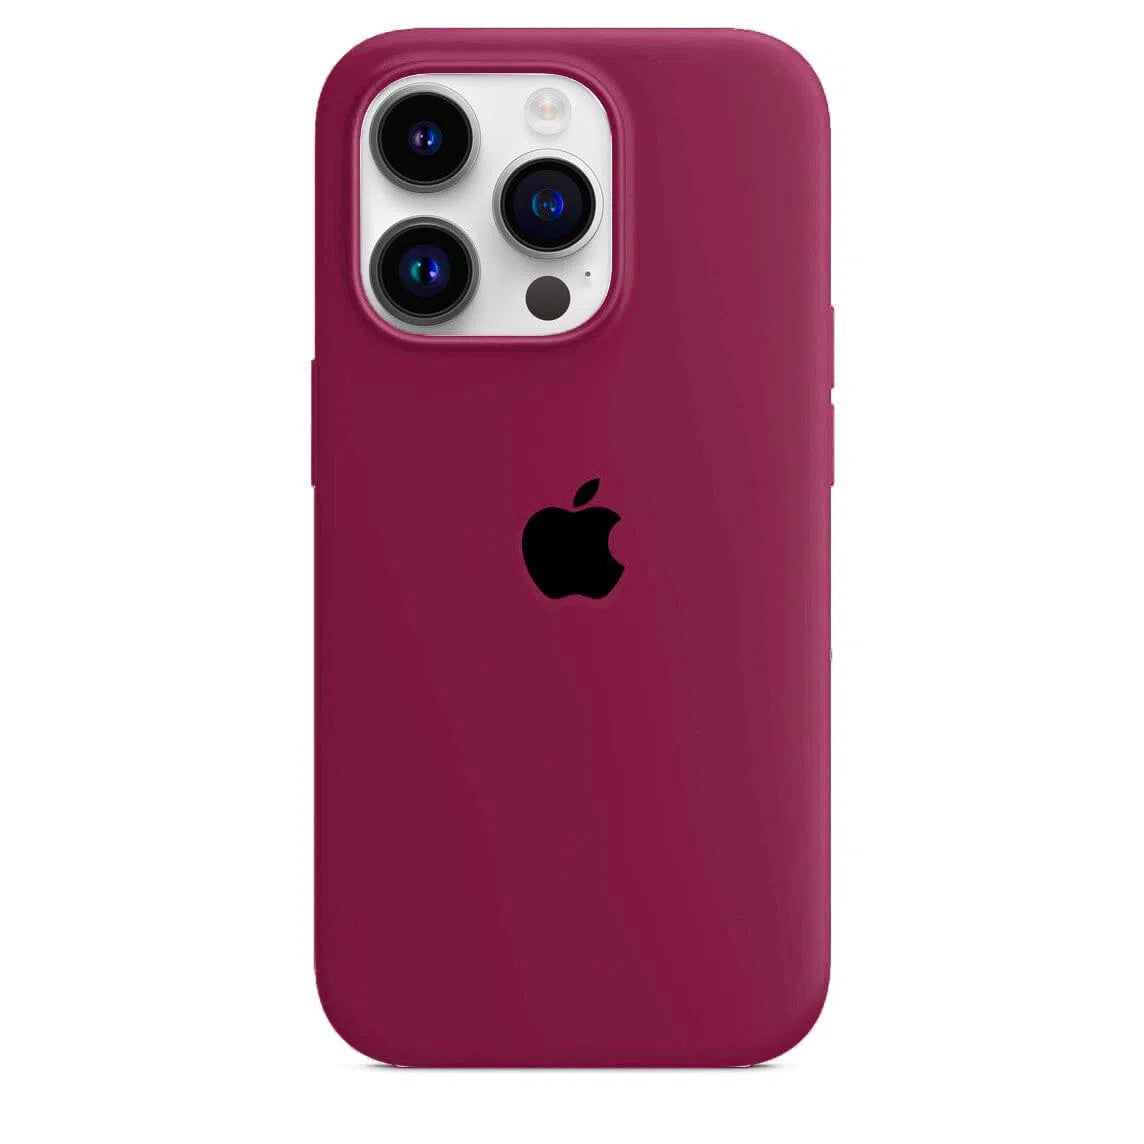 Husa iPhone Silicone Case Dark Rose (Burgundy) Anca's Store 12 Pro 